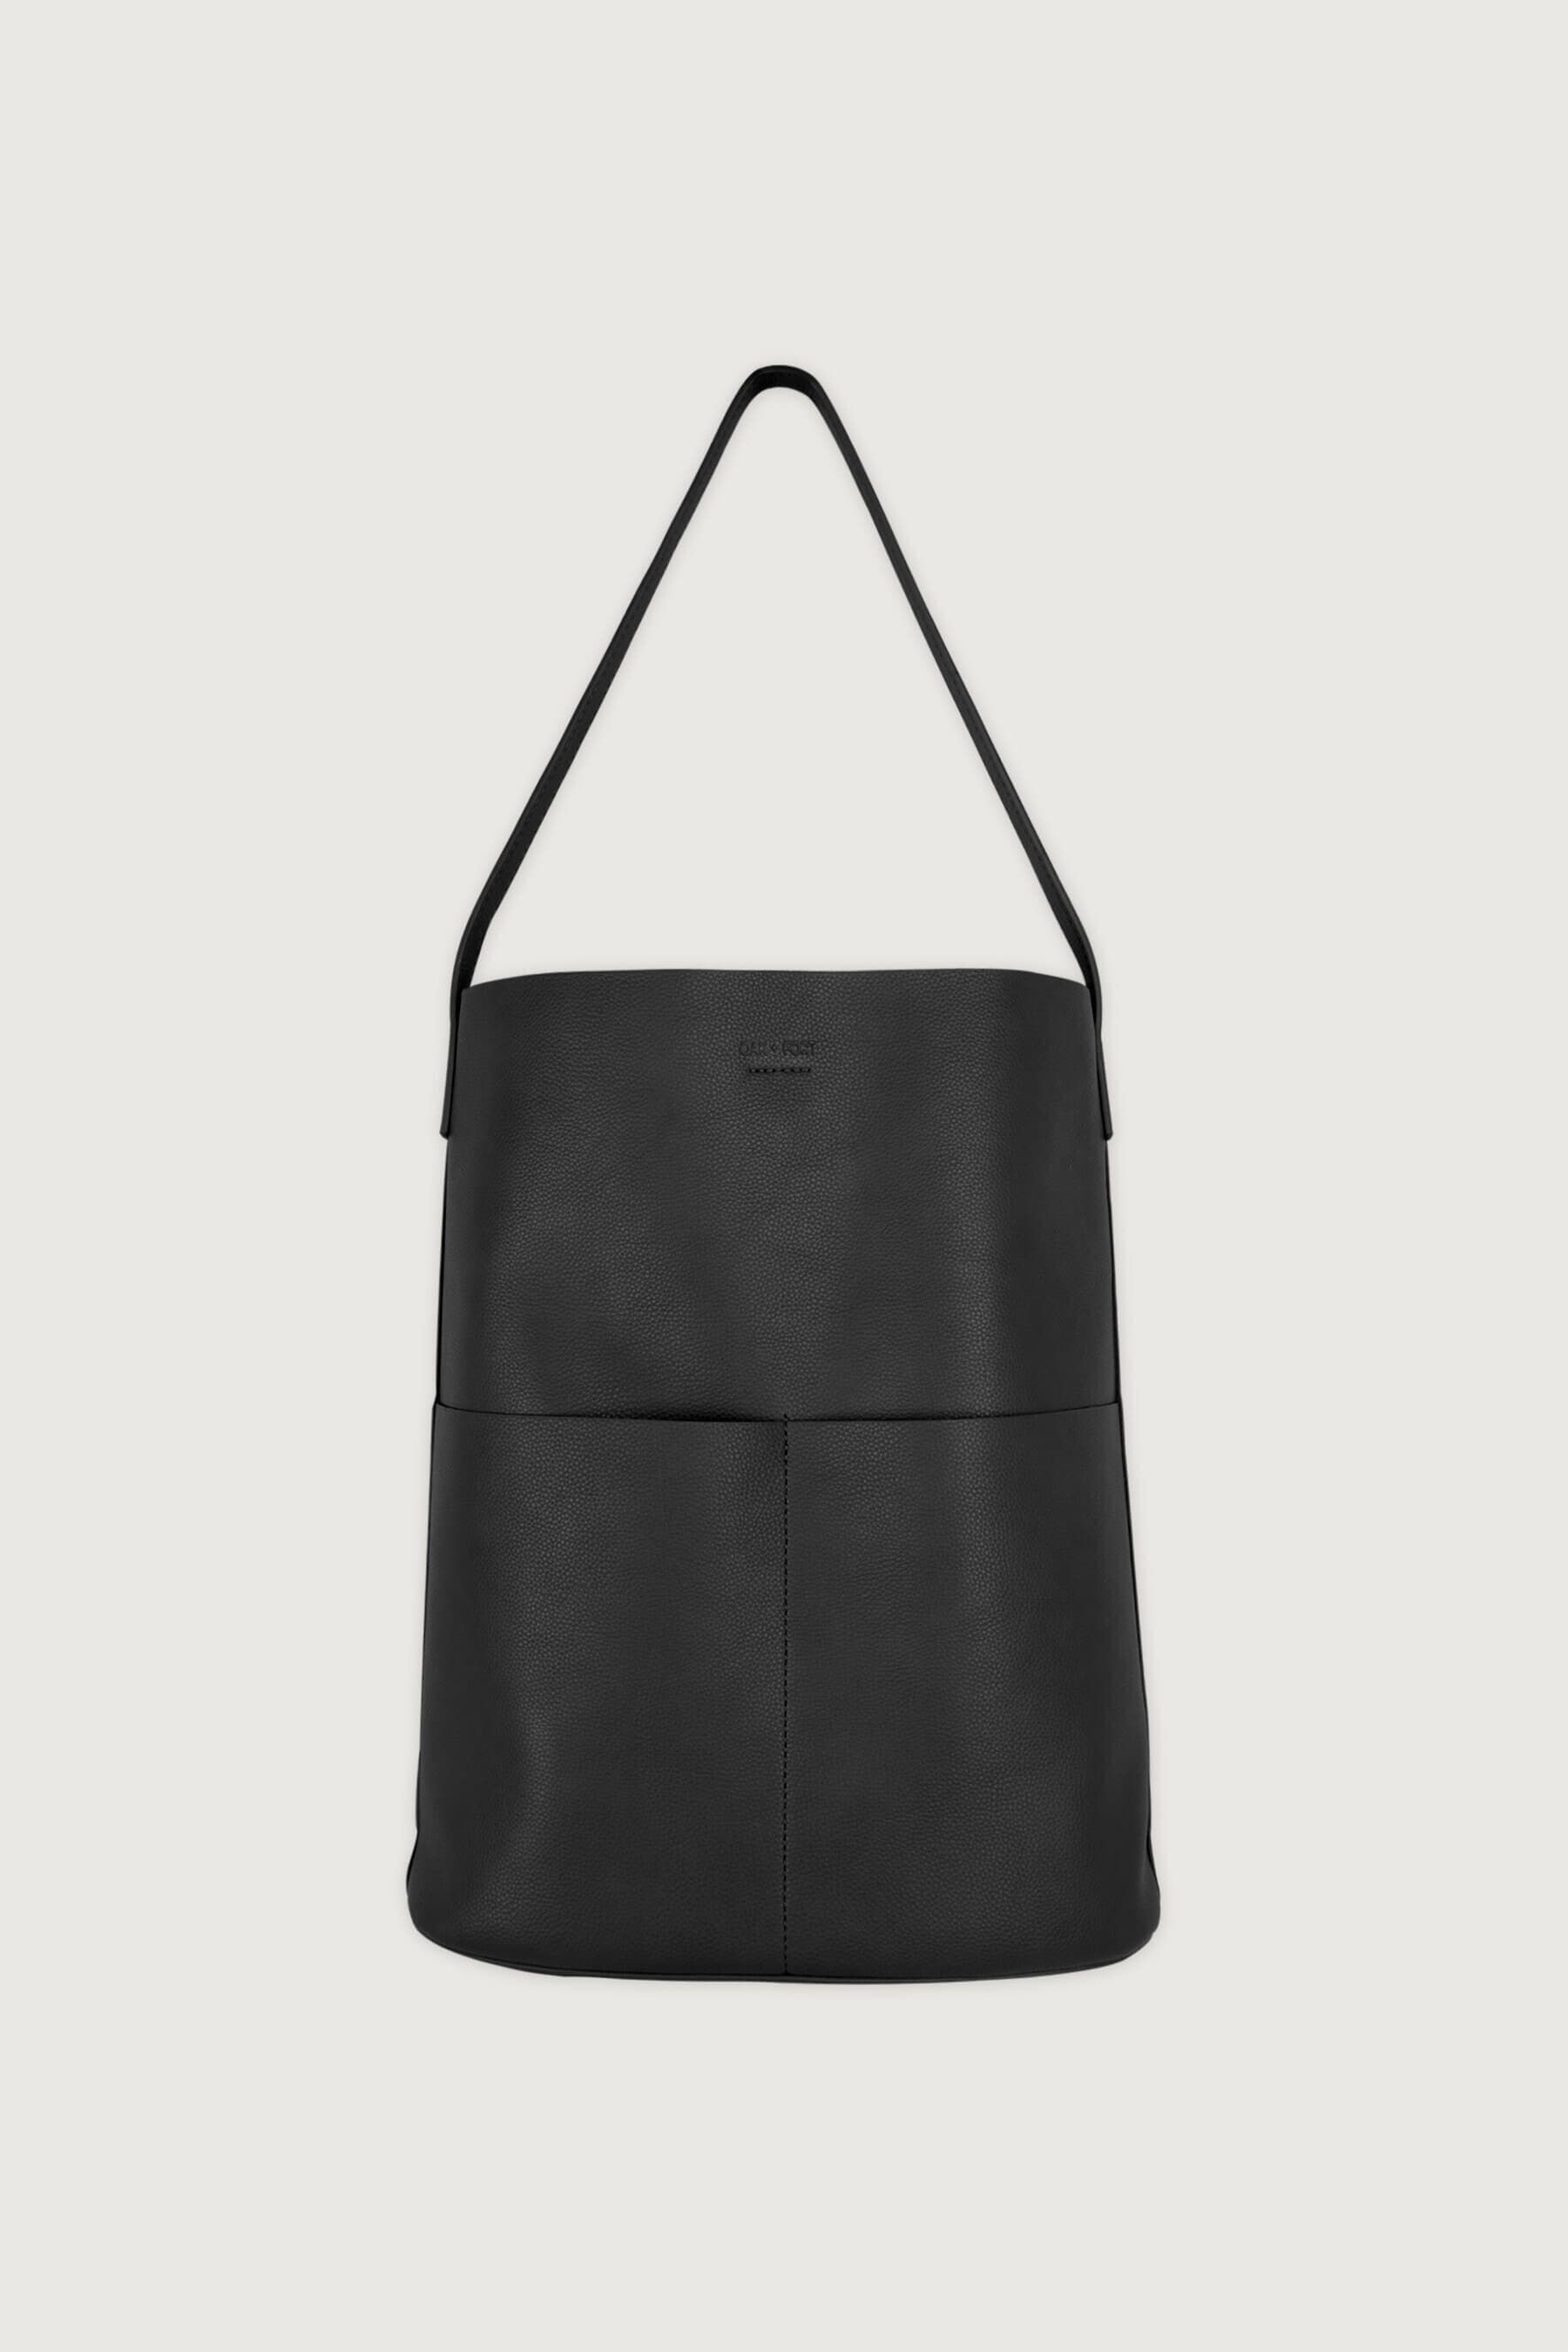 Tote Bag Canvas Handbag Shoulder Women Denim Shopping Large Bags Travel Satchel